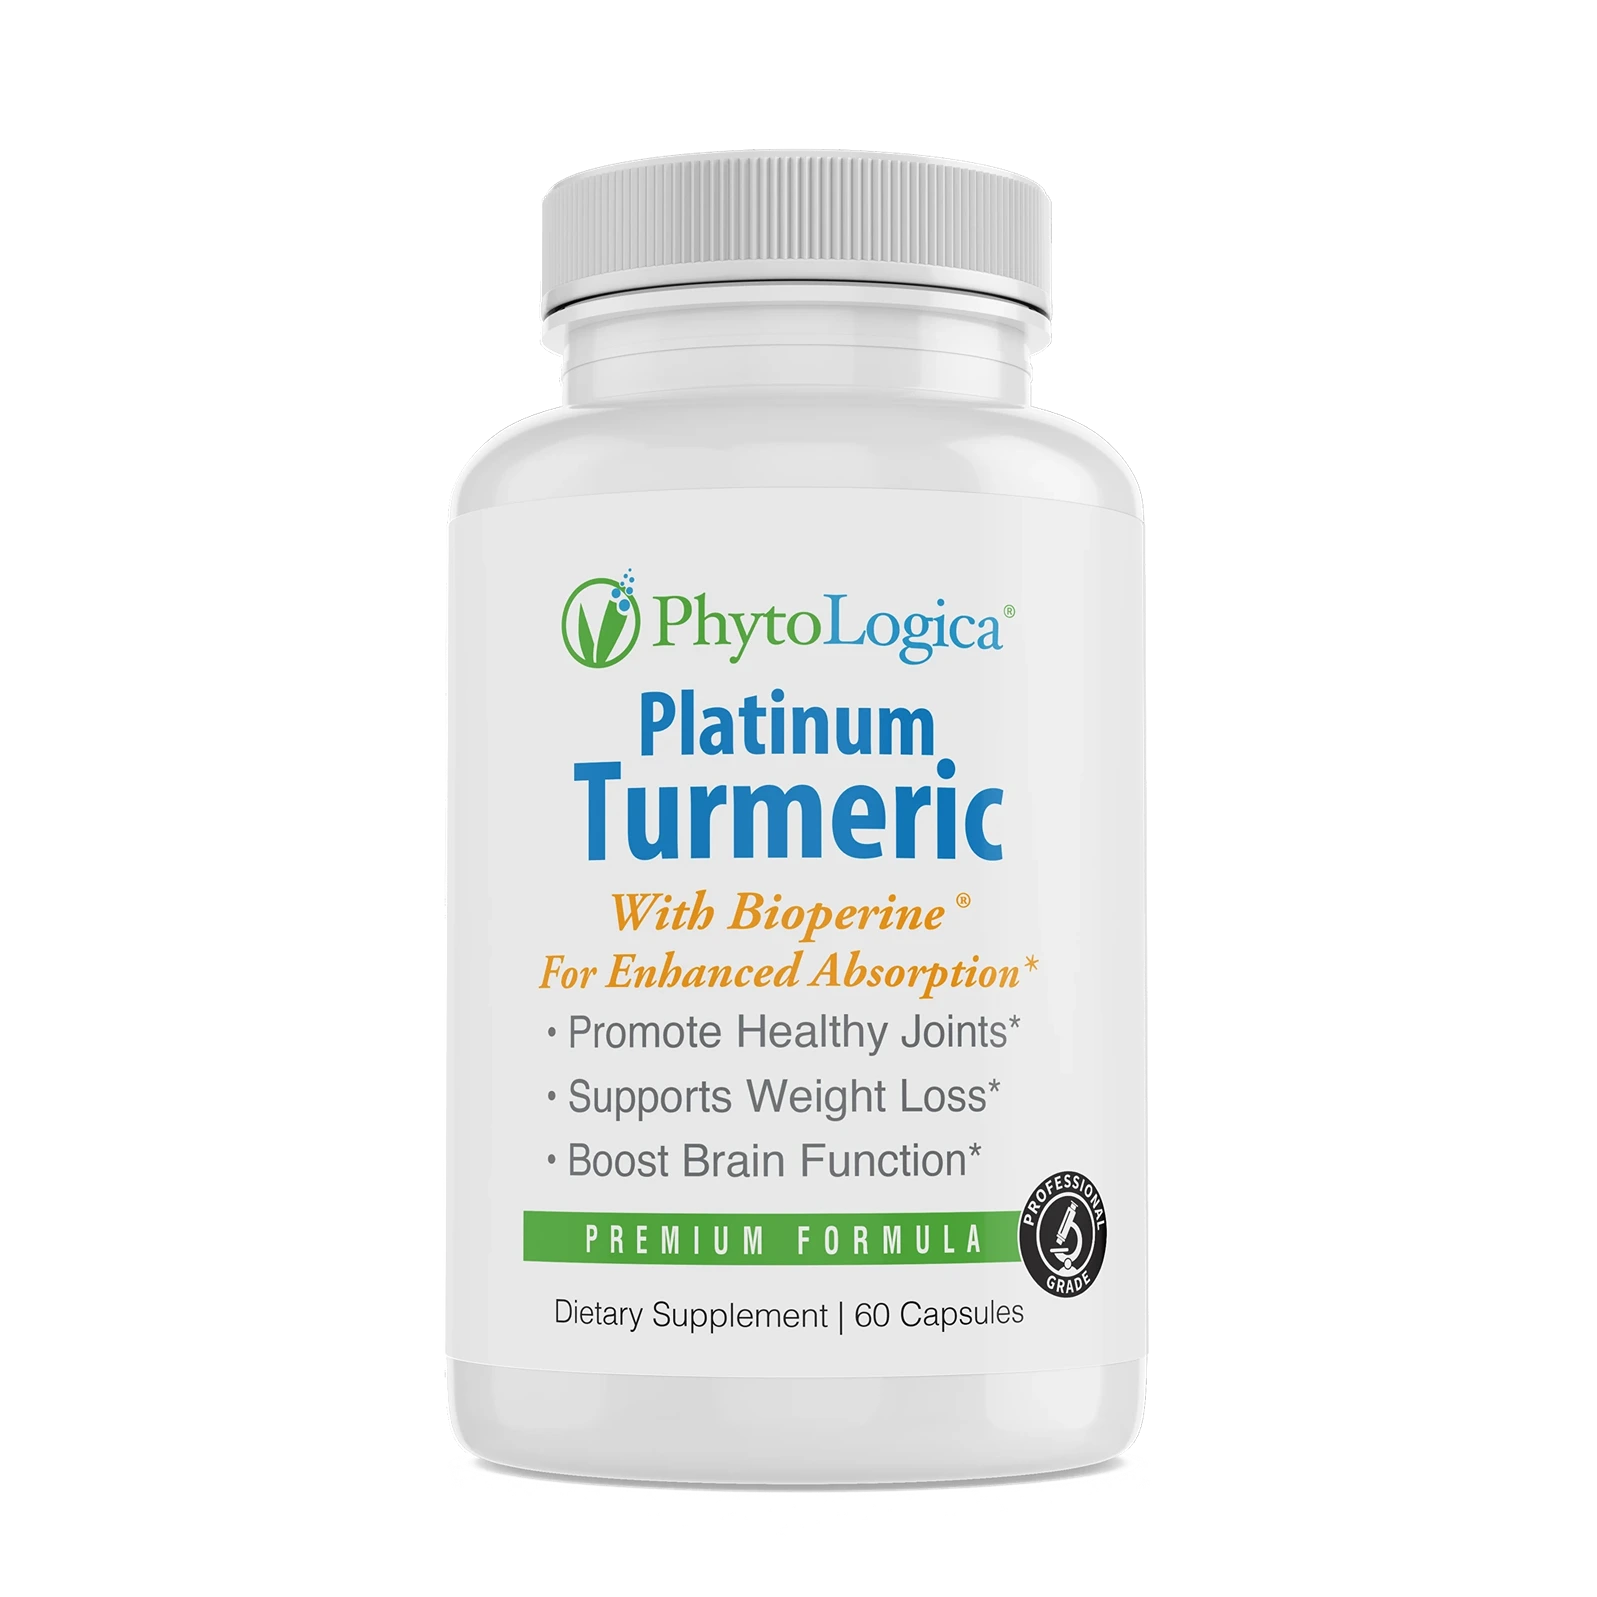 Phytologica Platinum Turmeric Curcumin Weight Loss and Bioperine Supplement Pills Bottle